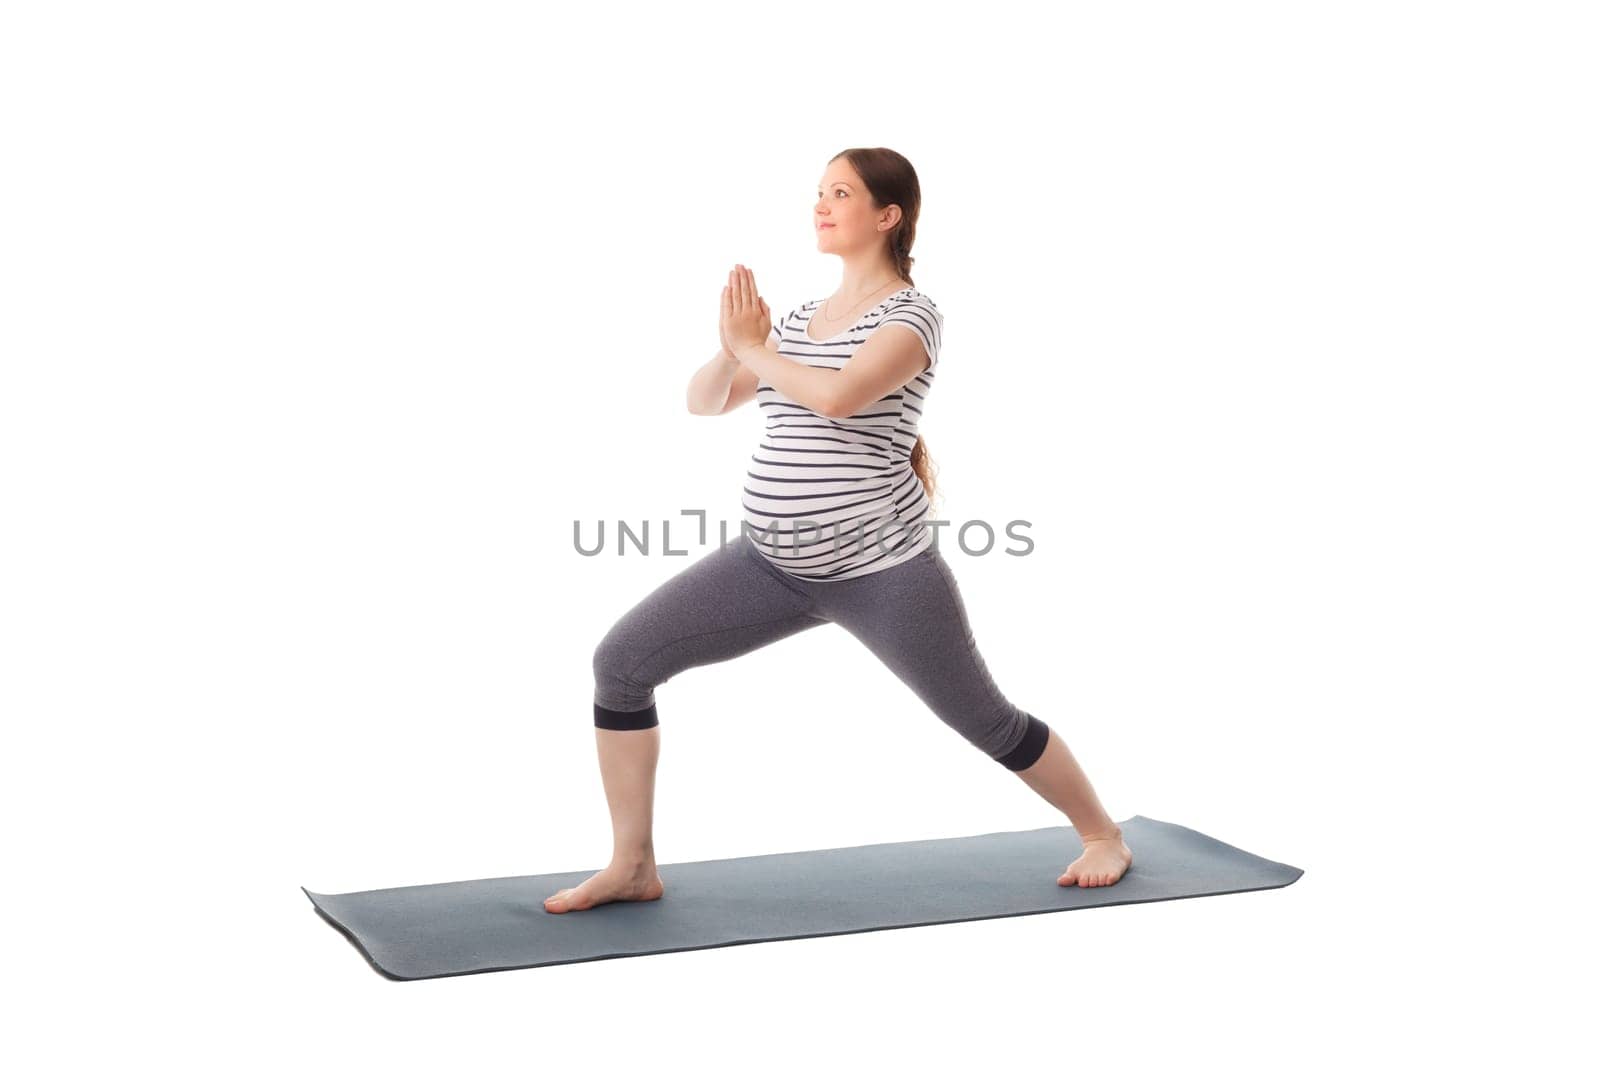 Pregnancy yoga exercise - pregnant woman doing asana virabhadrasana 1 - warrior pose isolated on white background